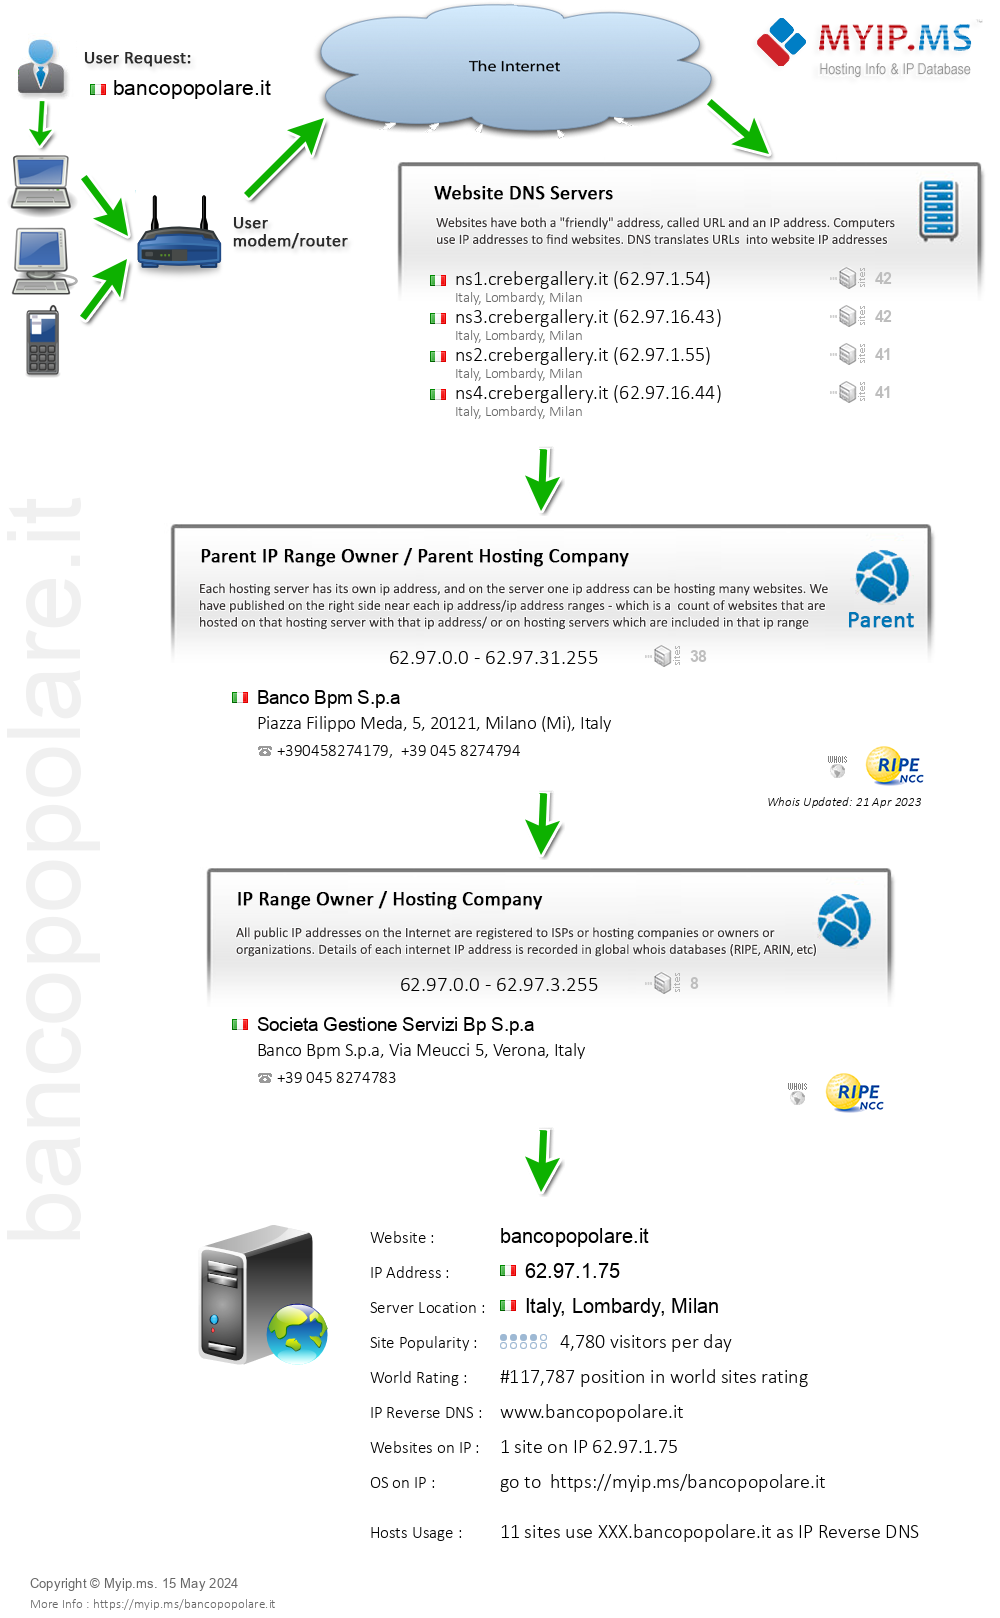 Bancopopolare.it - Website Hosting Visual IP Diagram